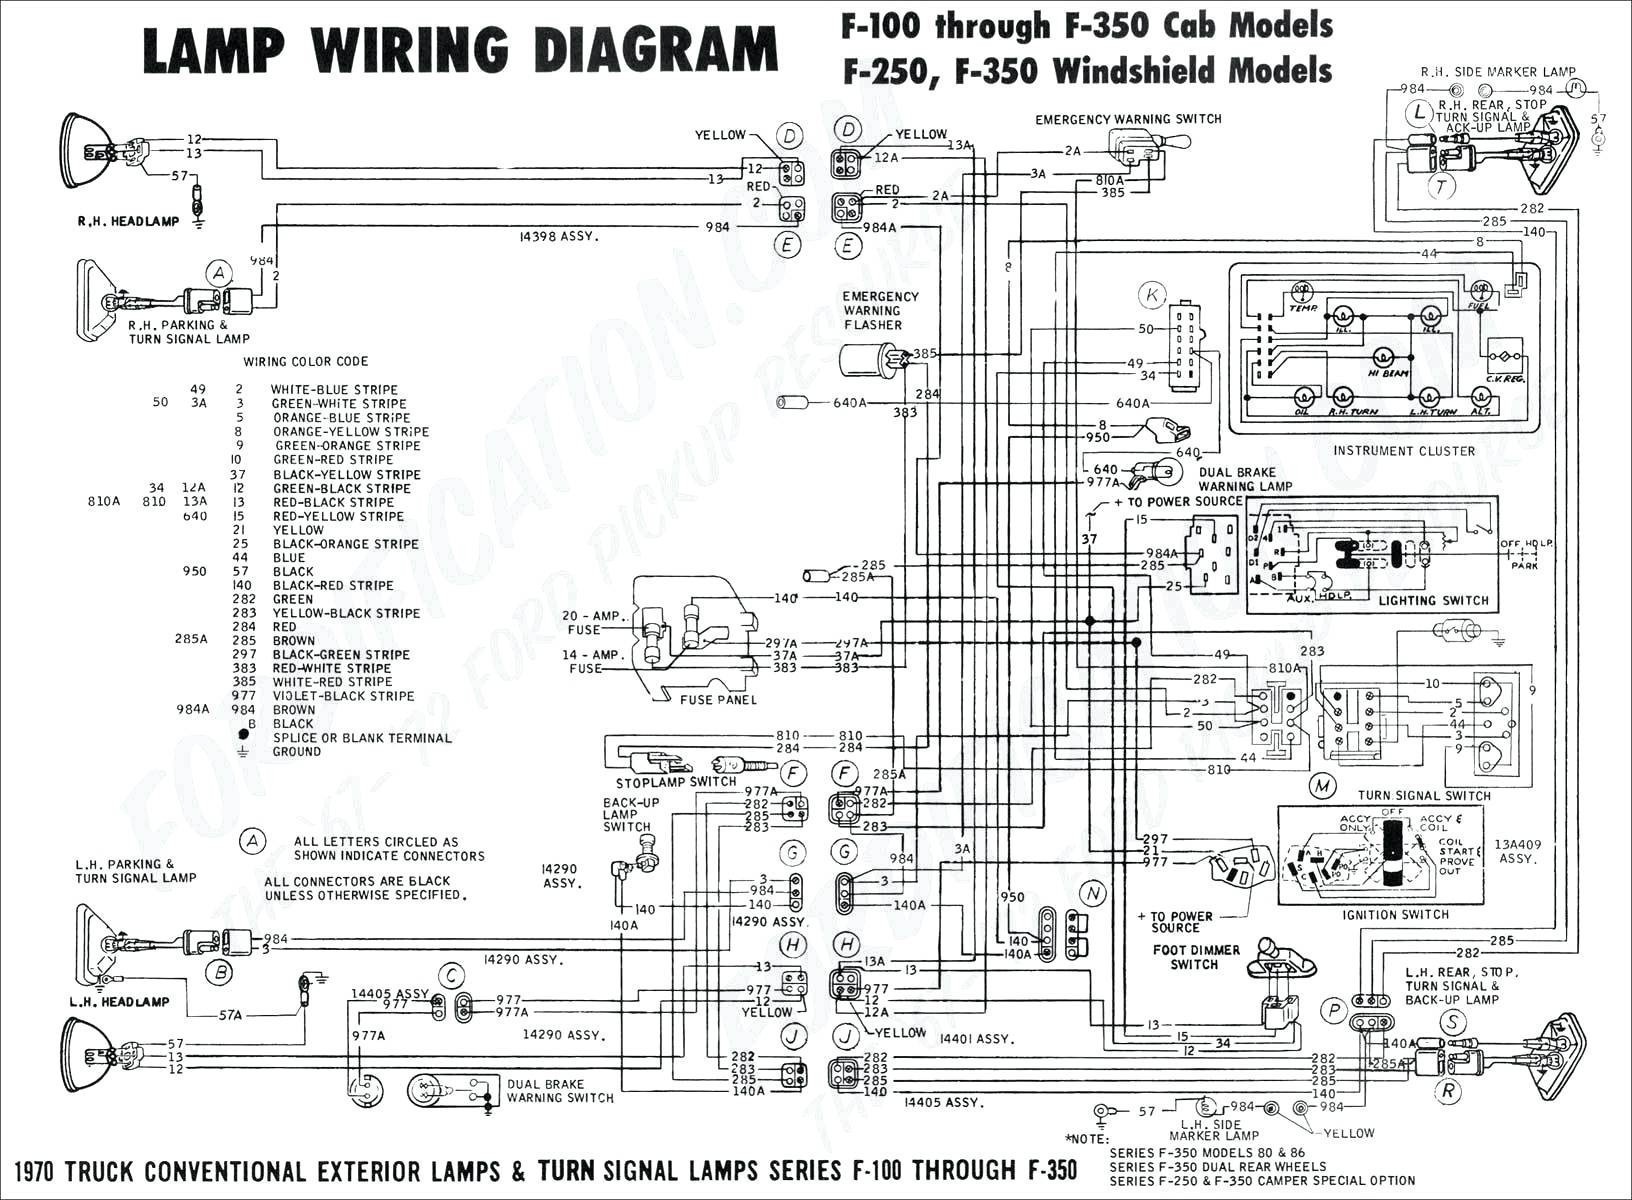 2002 Chevy Malibu Engine Diagram Gm Abs Wiring Diagram Layout Wiring Diagrams • Of 2002 Chevy Malibu Engine Diagram